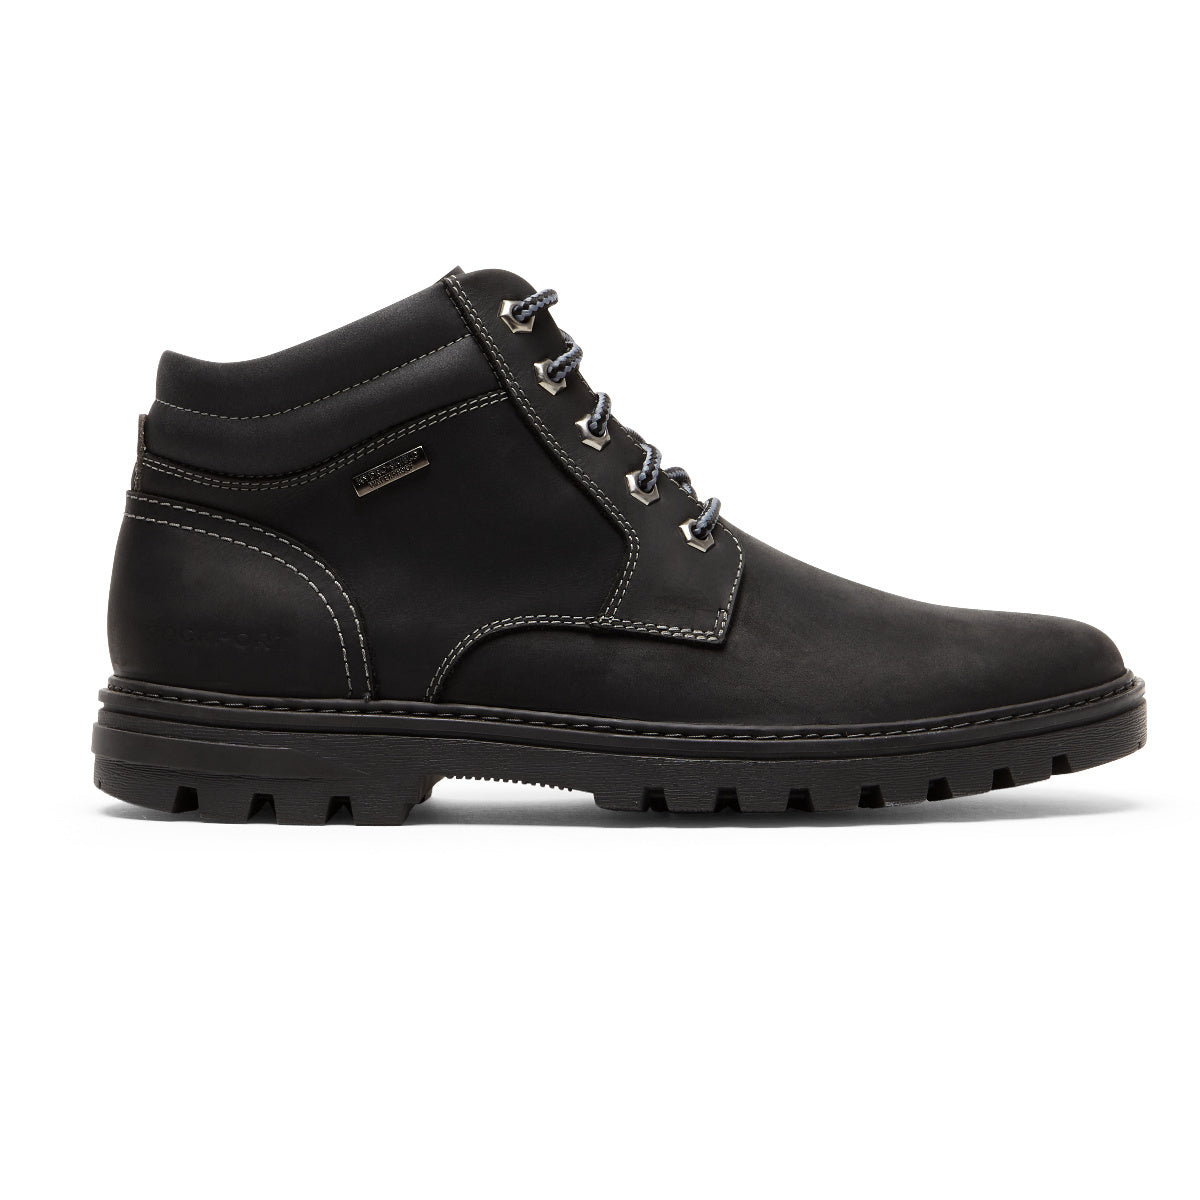 Weather or Not Waterproof Men's Boot (Black Leather/ Suede)